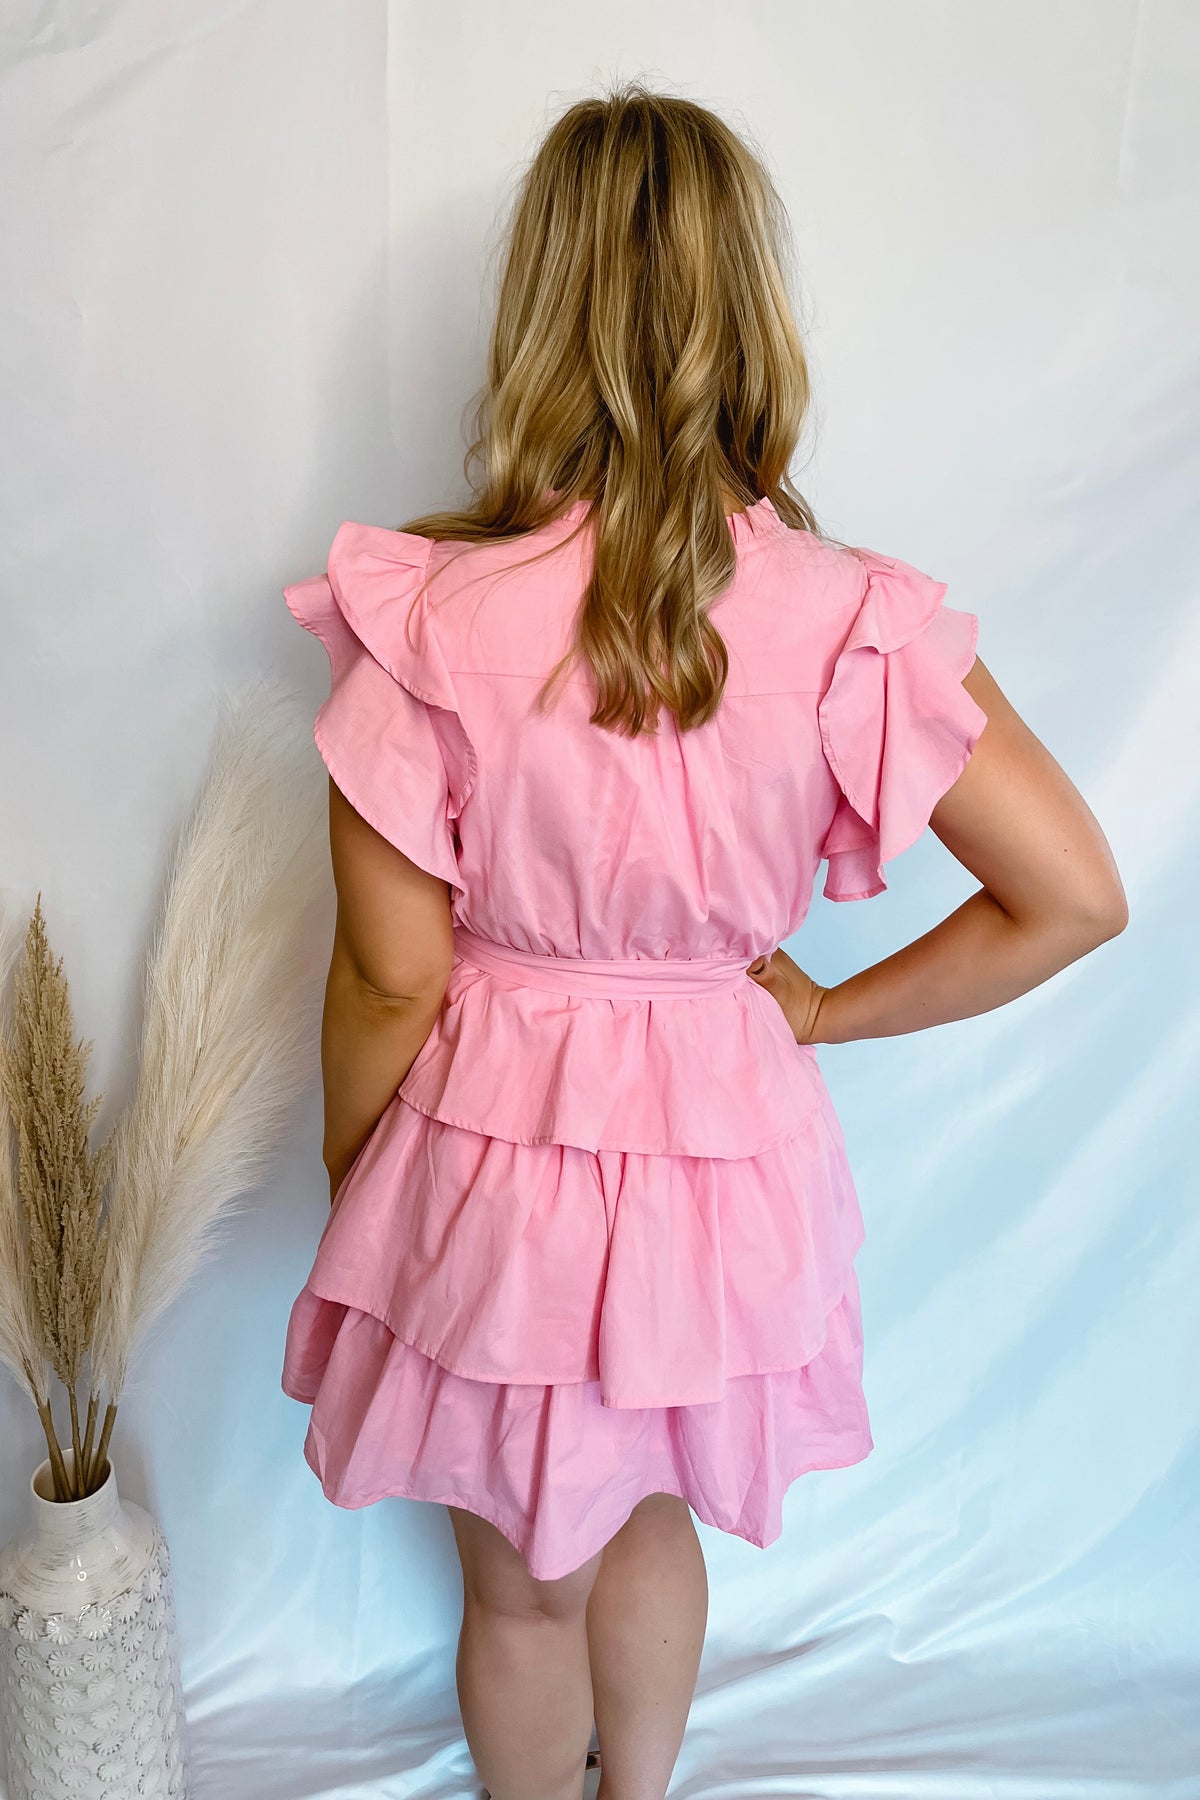 Cutest In The Room Pink Ruffle Mini Dress